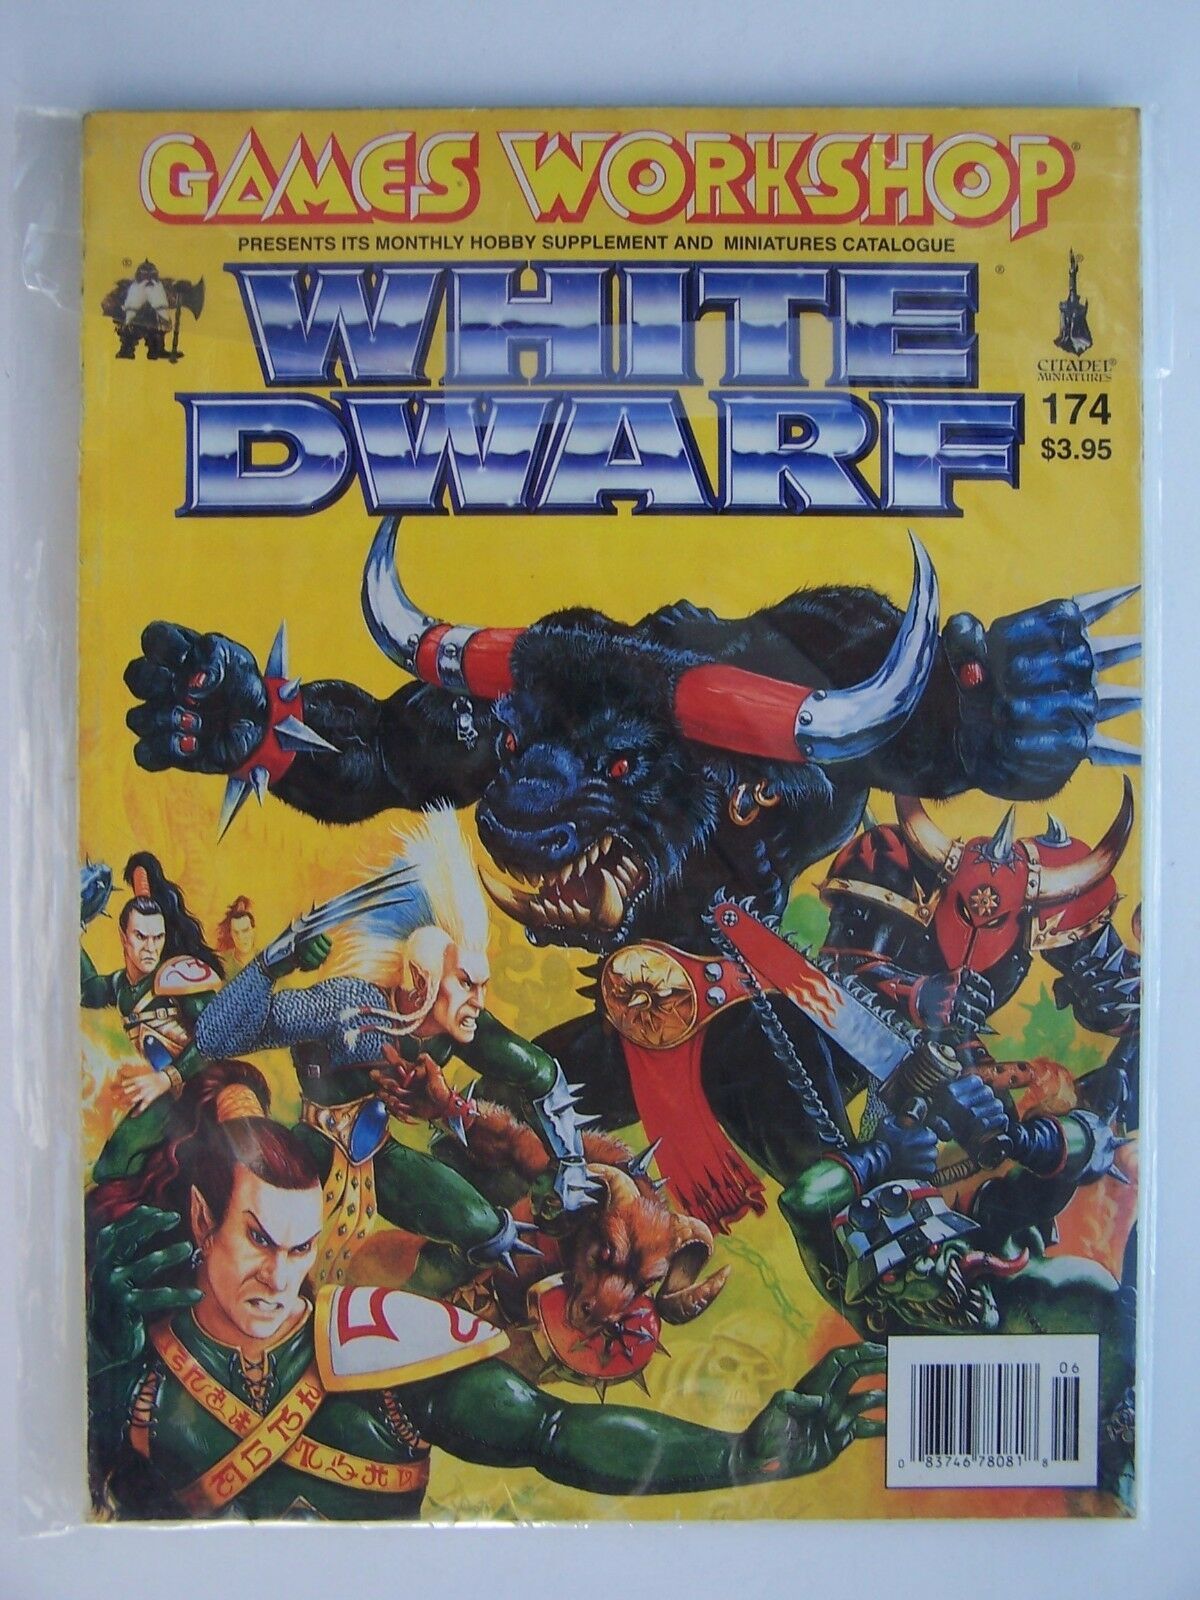 latest white dwarf magazine